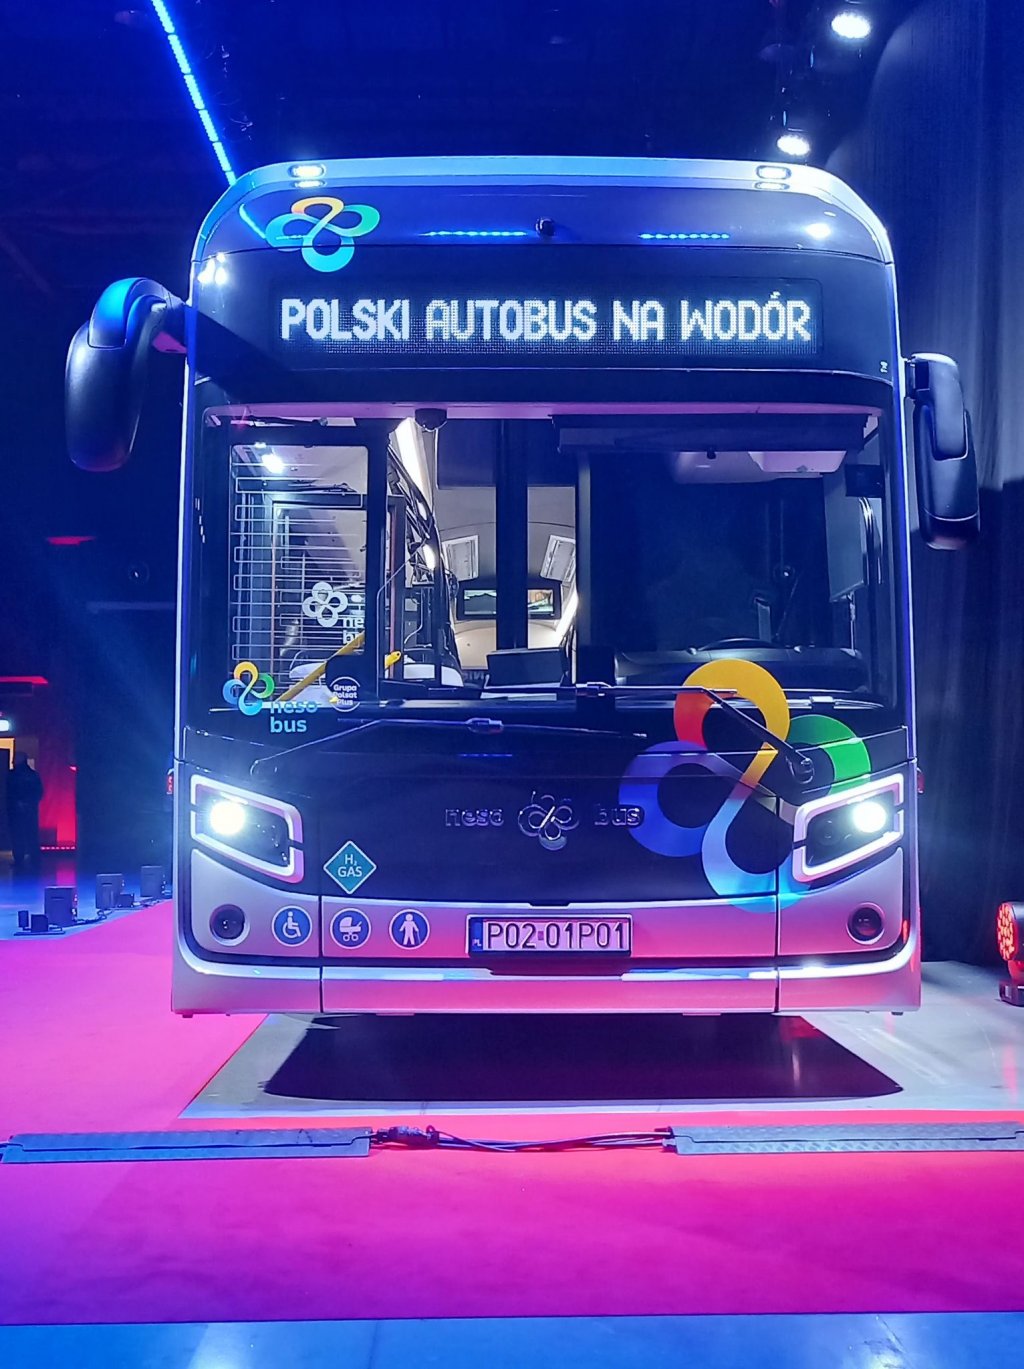 NesoBus polski autobus na wodór